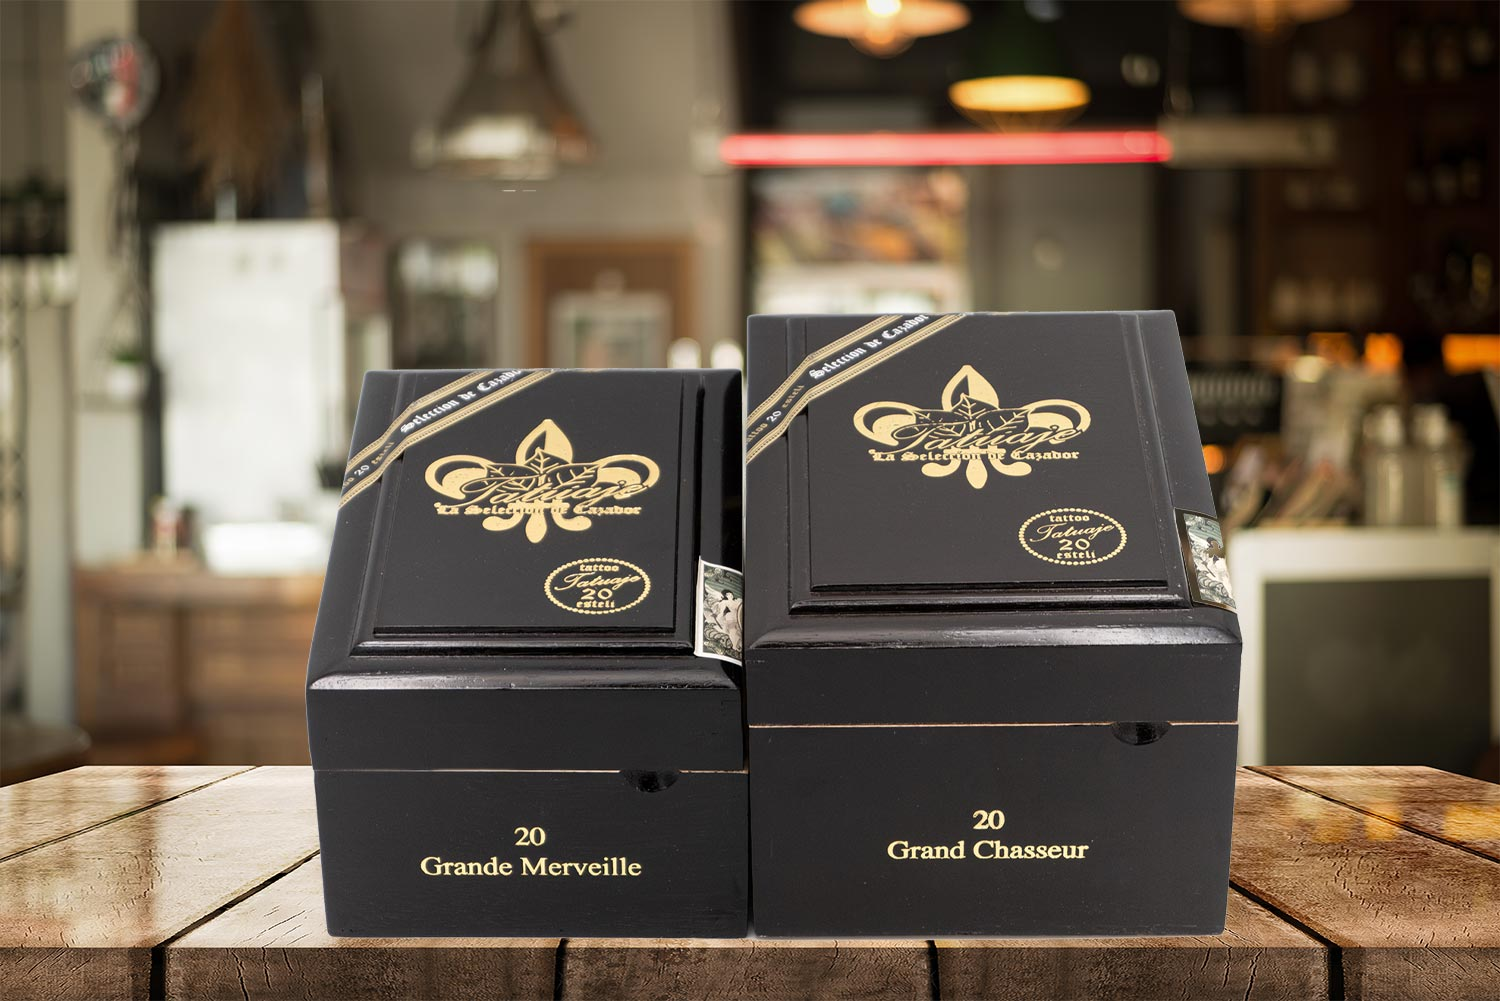 A box of Tatuaje 20th Grande Merveille and Grand Chasseur cigars